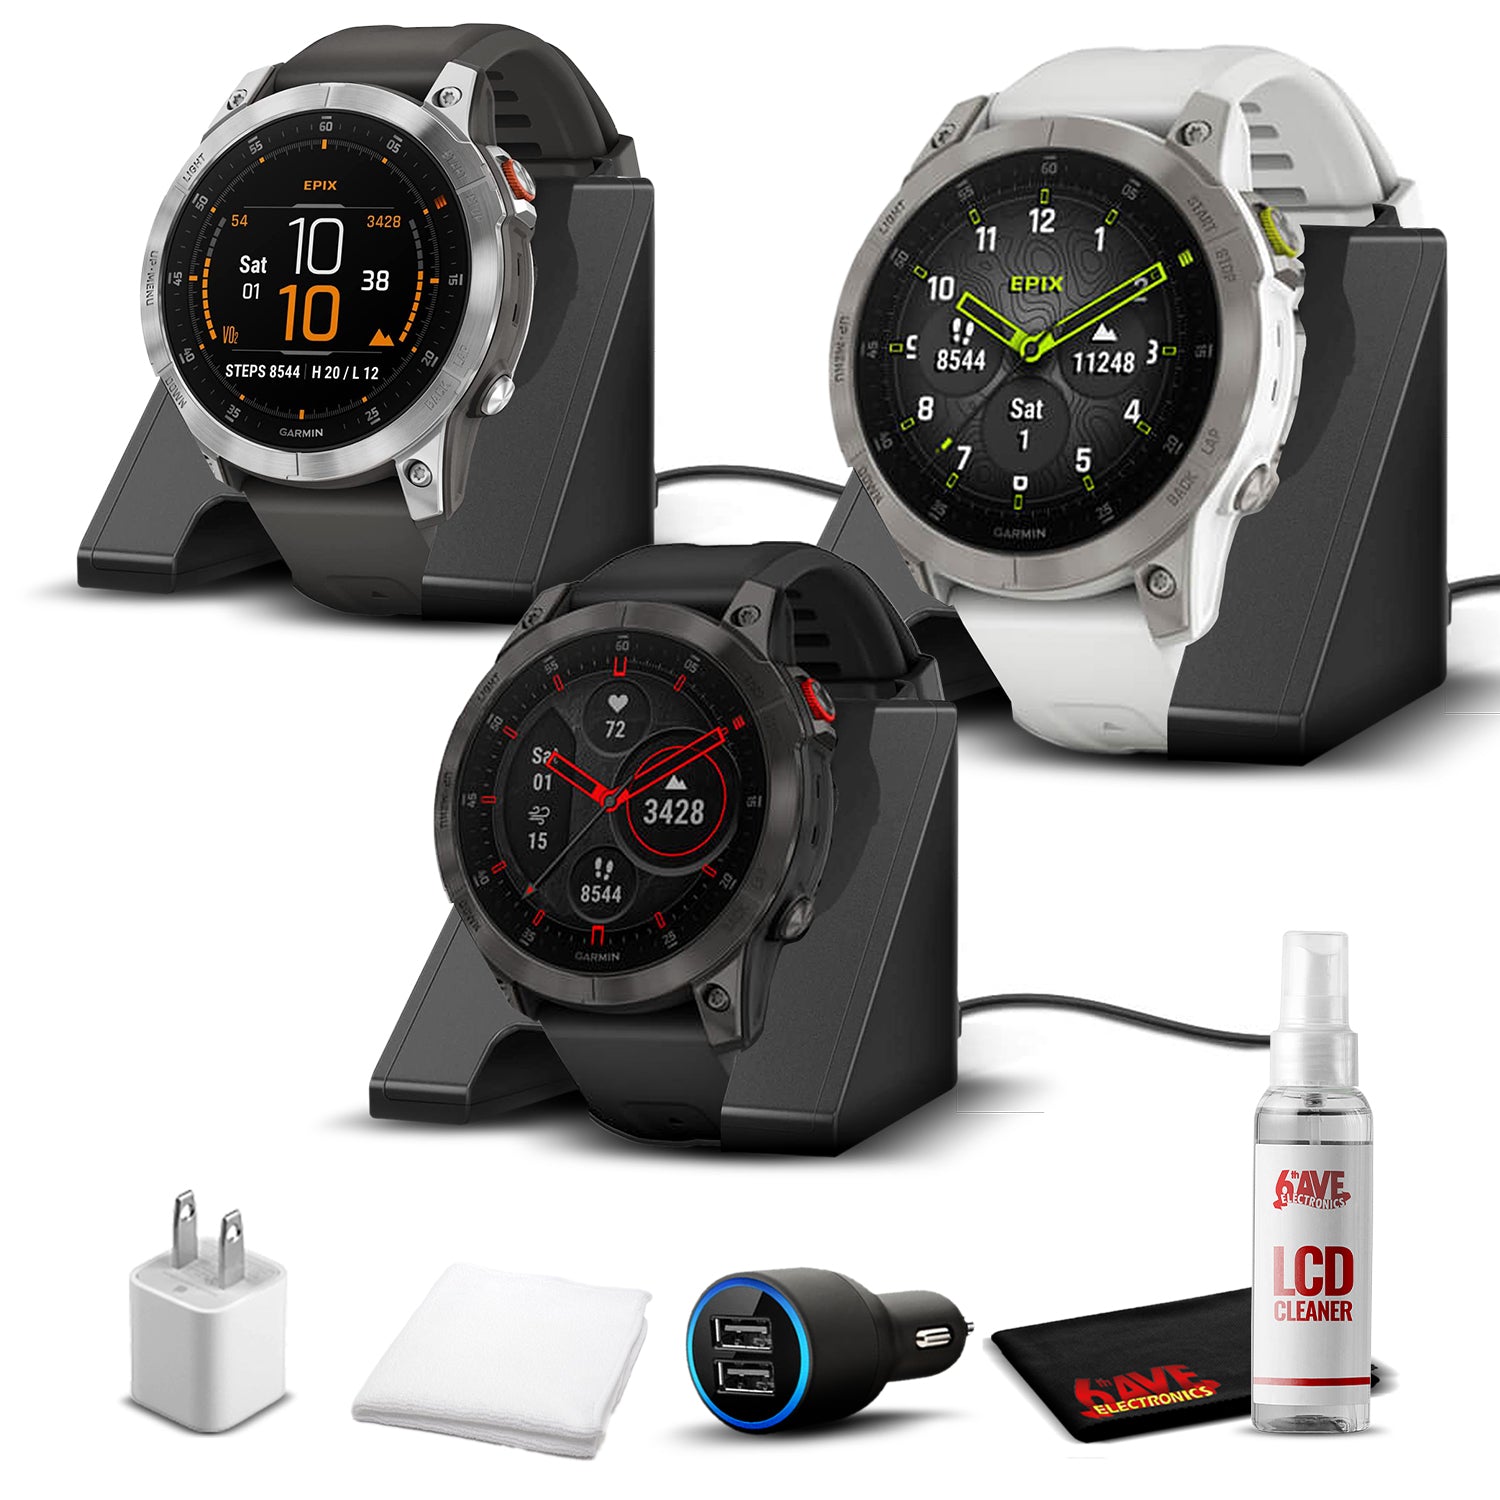 Garmin Epix Gen 2 GPS Premium Fitness Smartwatch with Standard Accessory Kit -